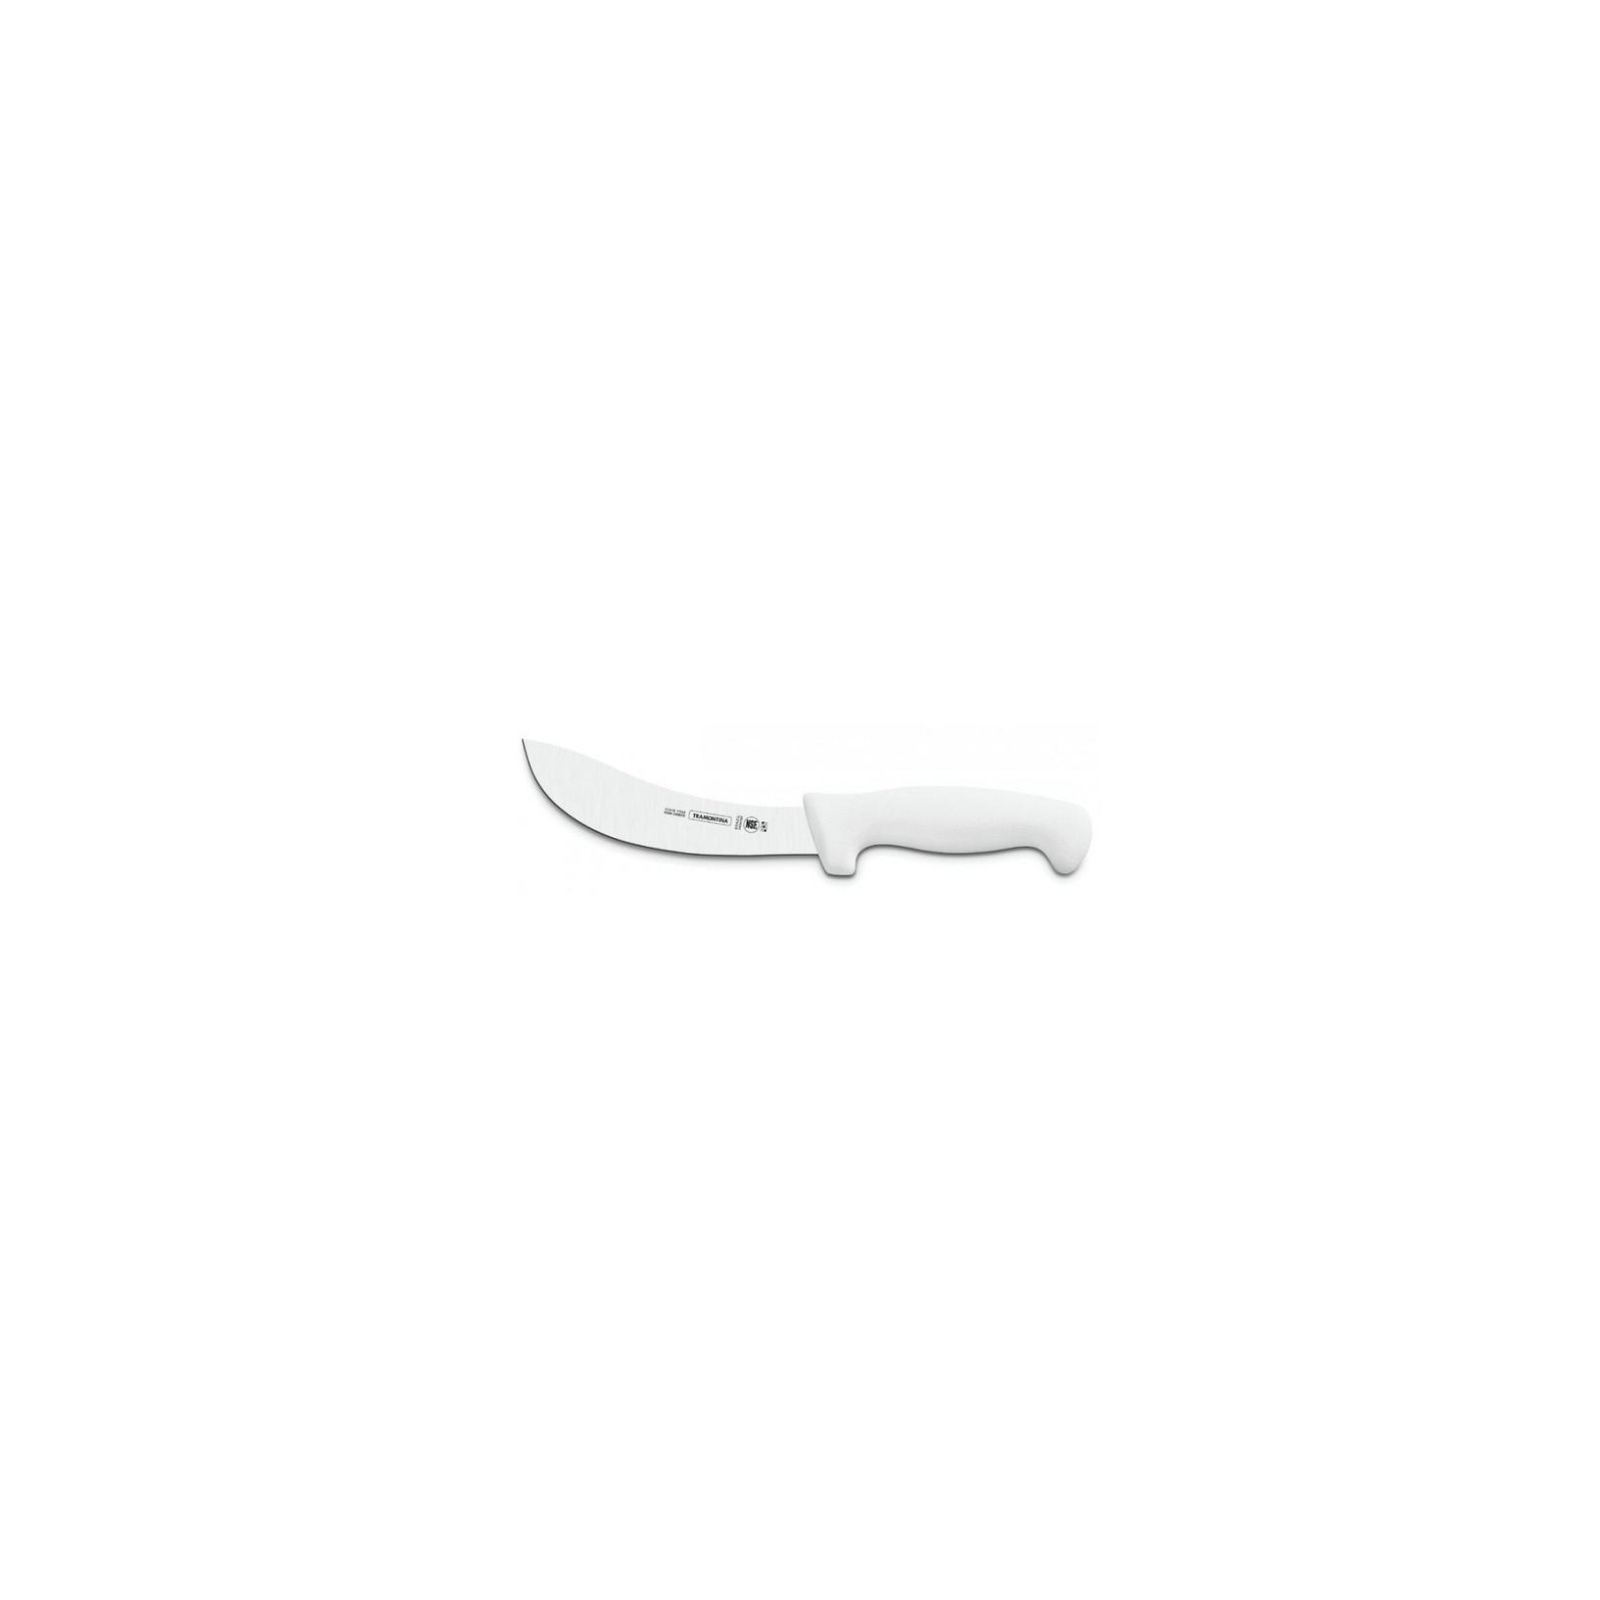 Кухонный нож Tramontina Professional Master разделочный 152 мм White (24606/086)